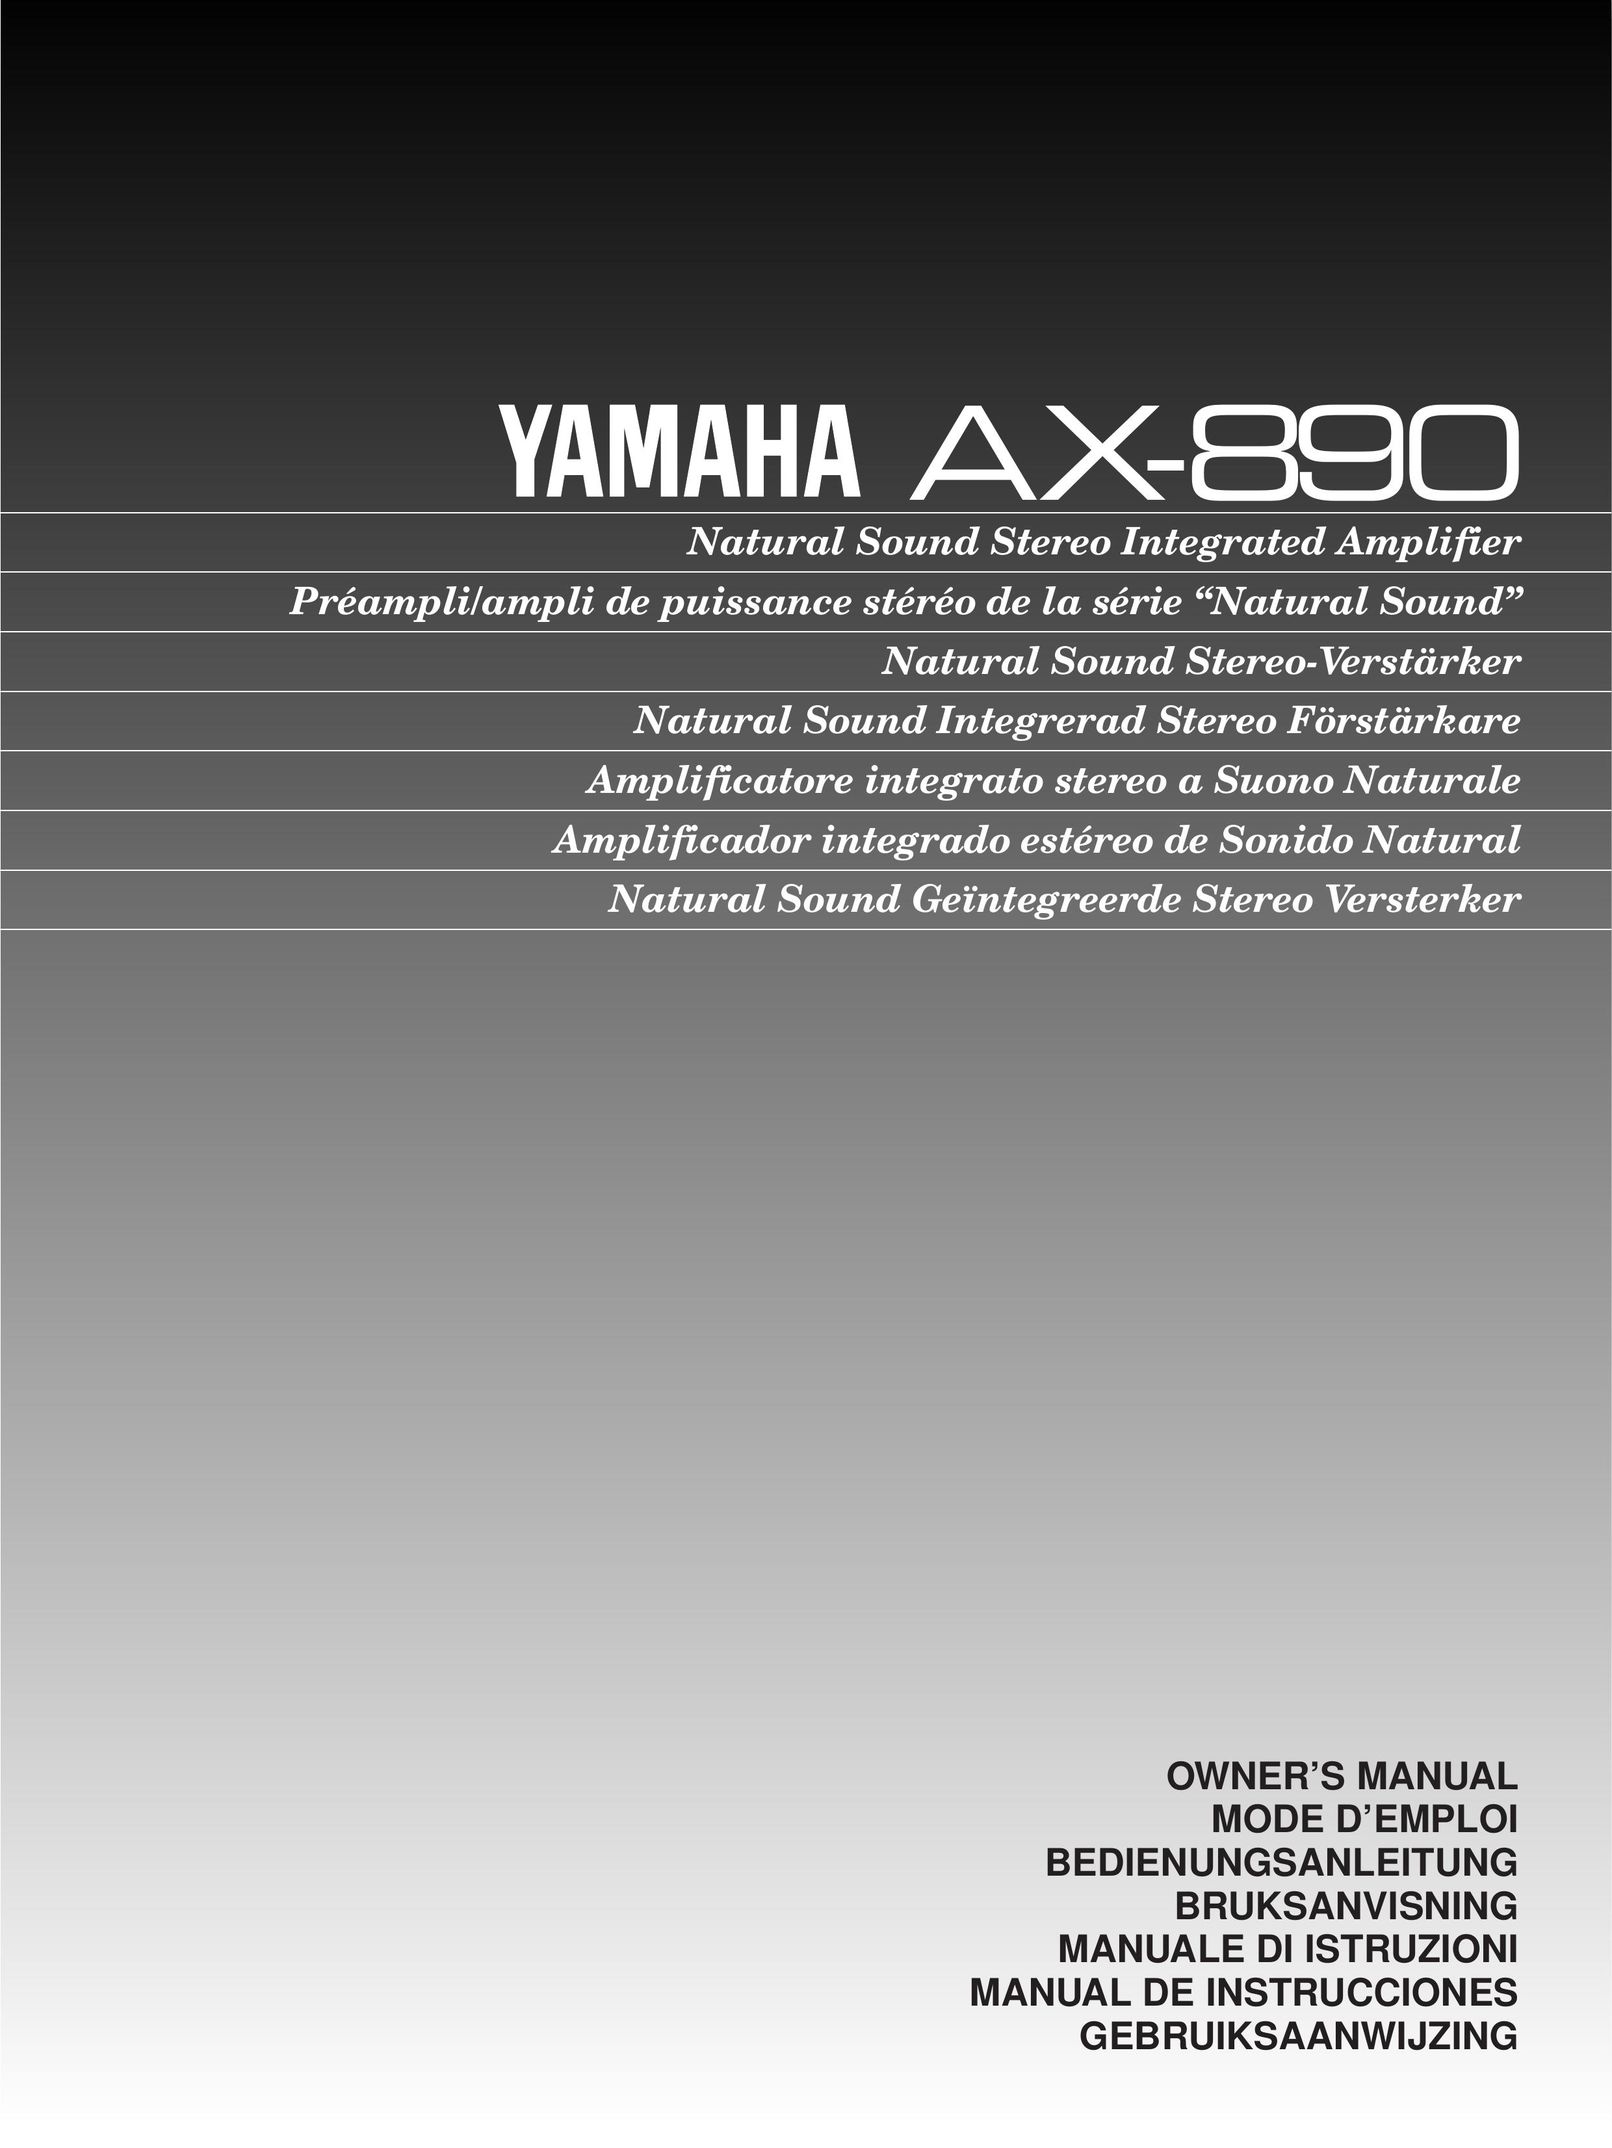 Yamaha AX-890 Stereo Amplifier User Manual